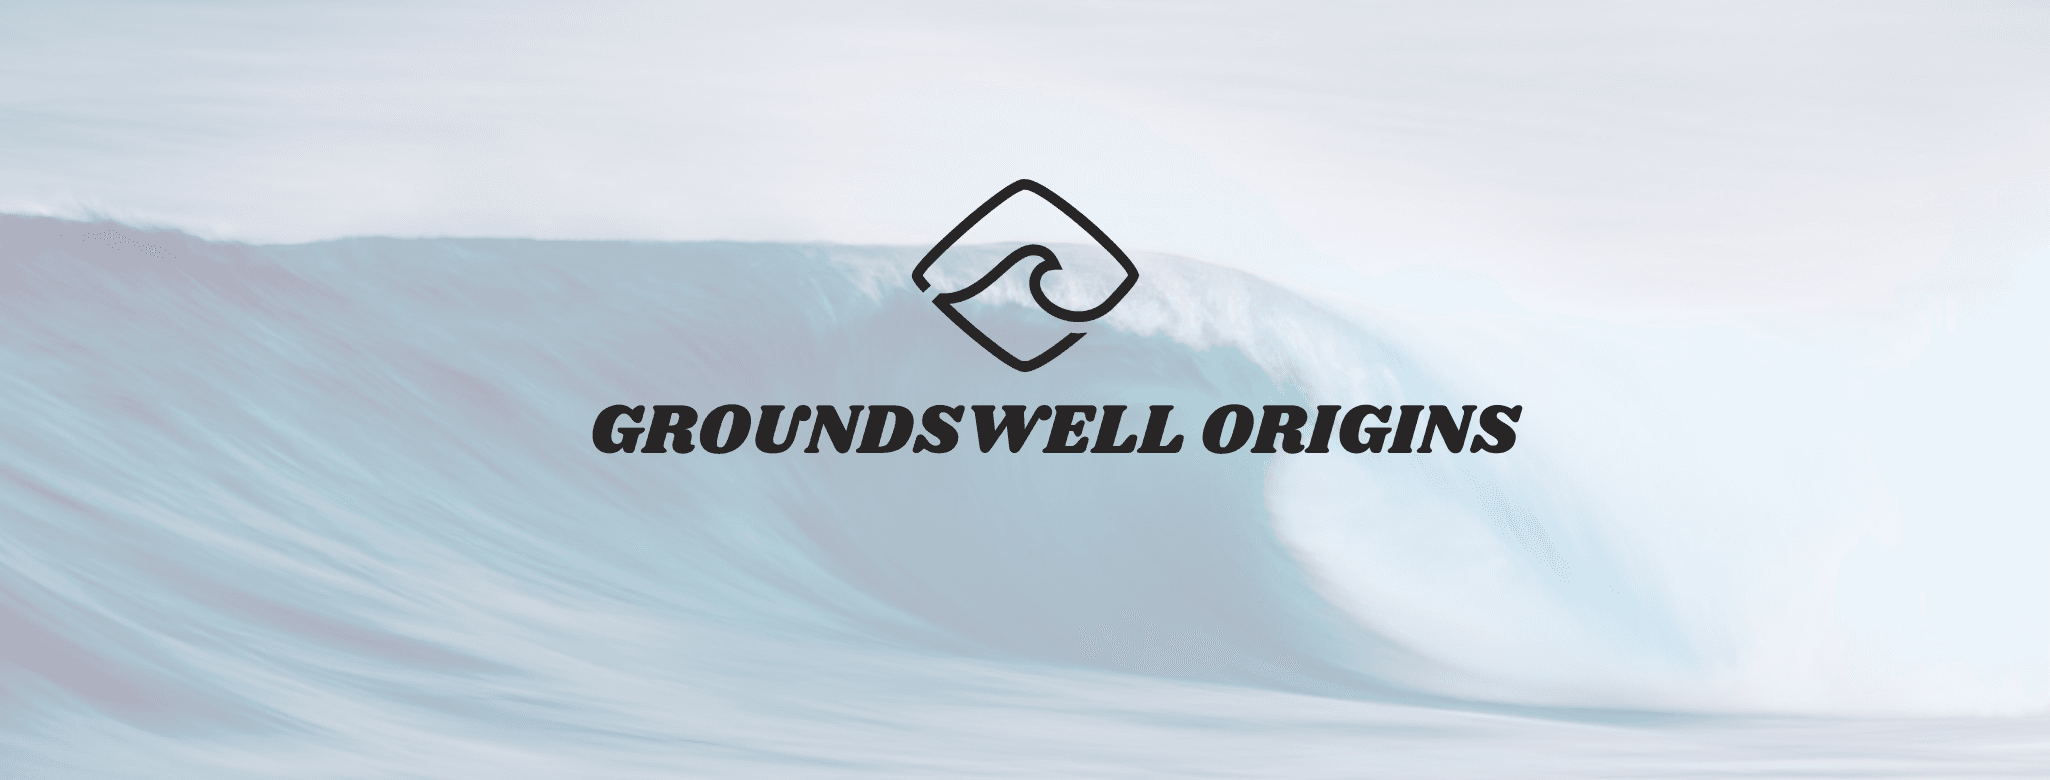 GroundswellOrigins banner